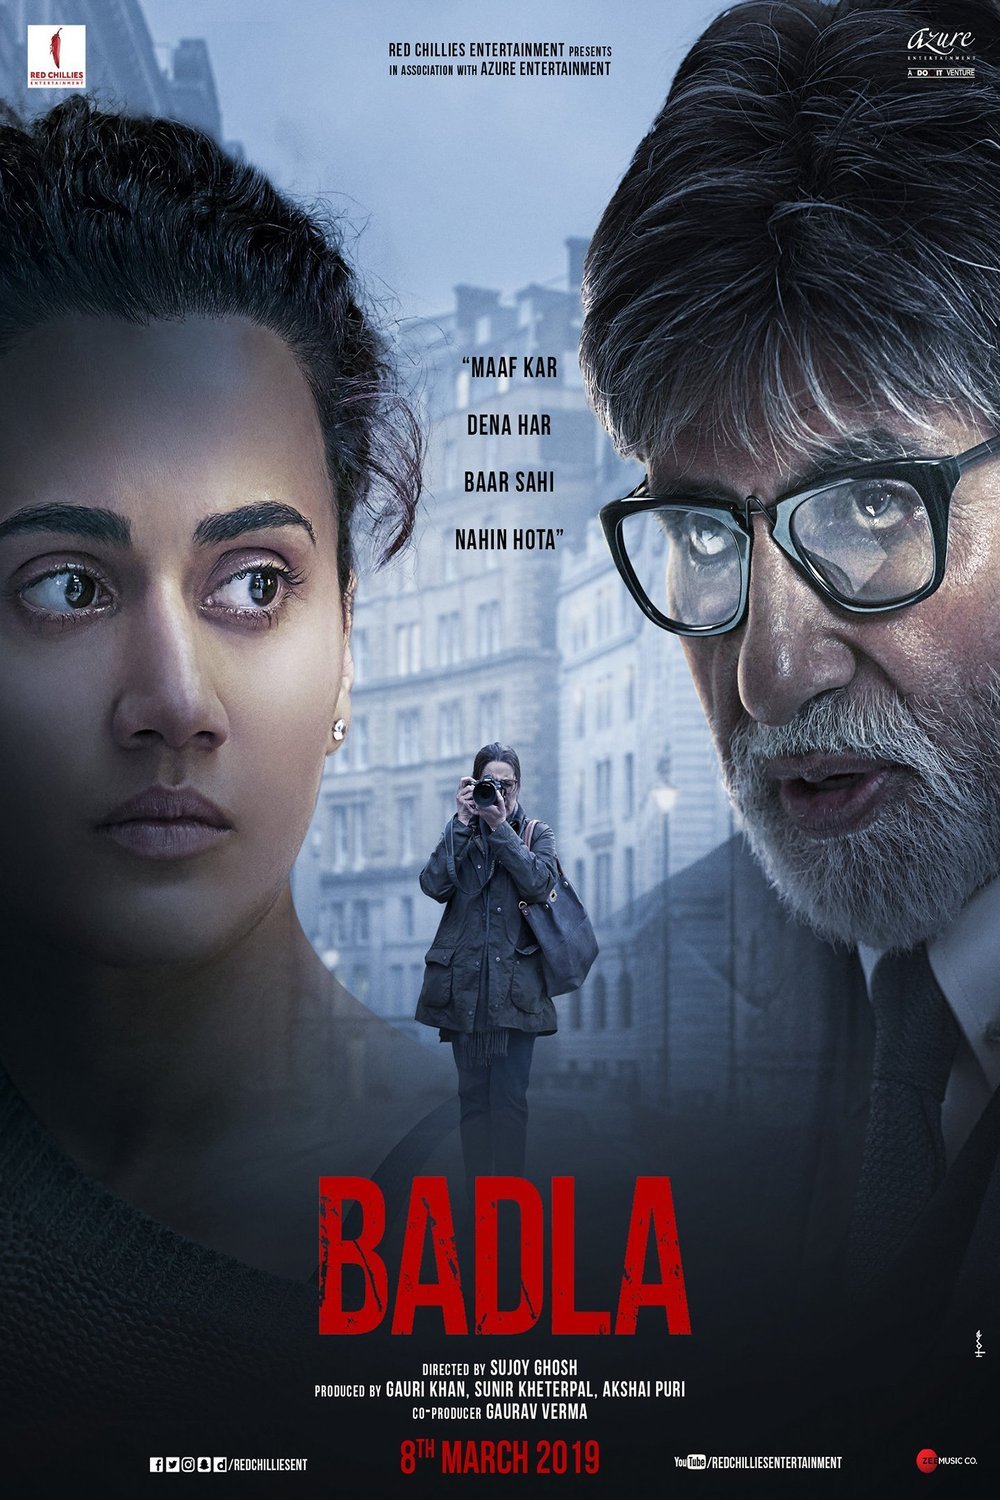 Hindi poster of the movie Badla